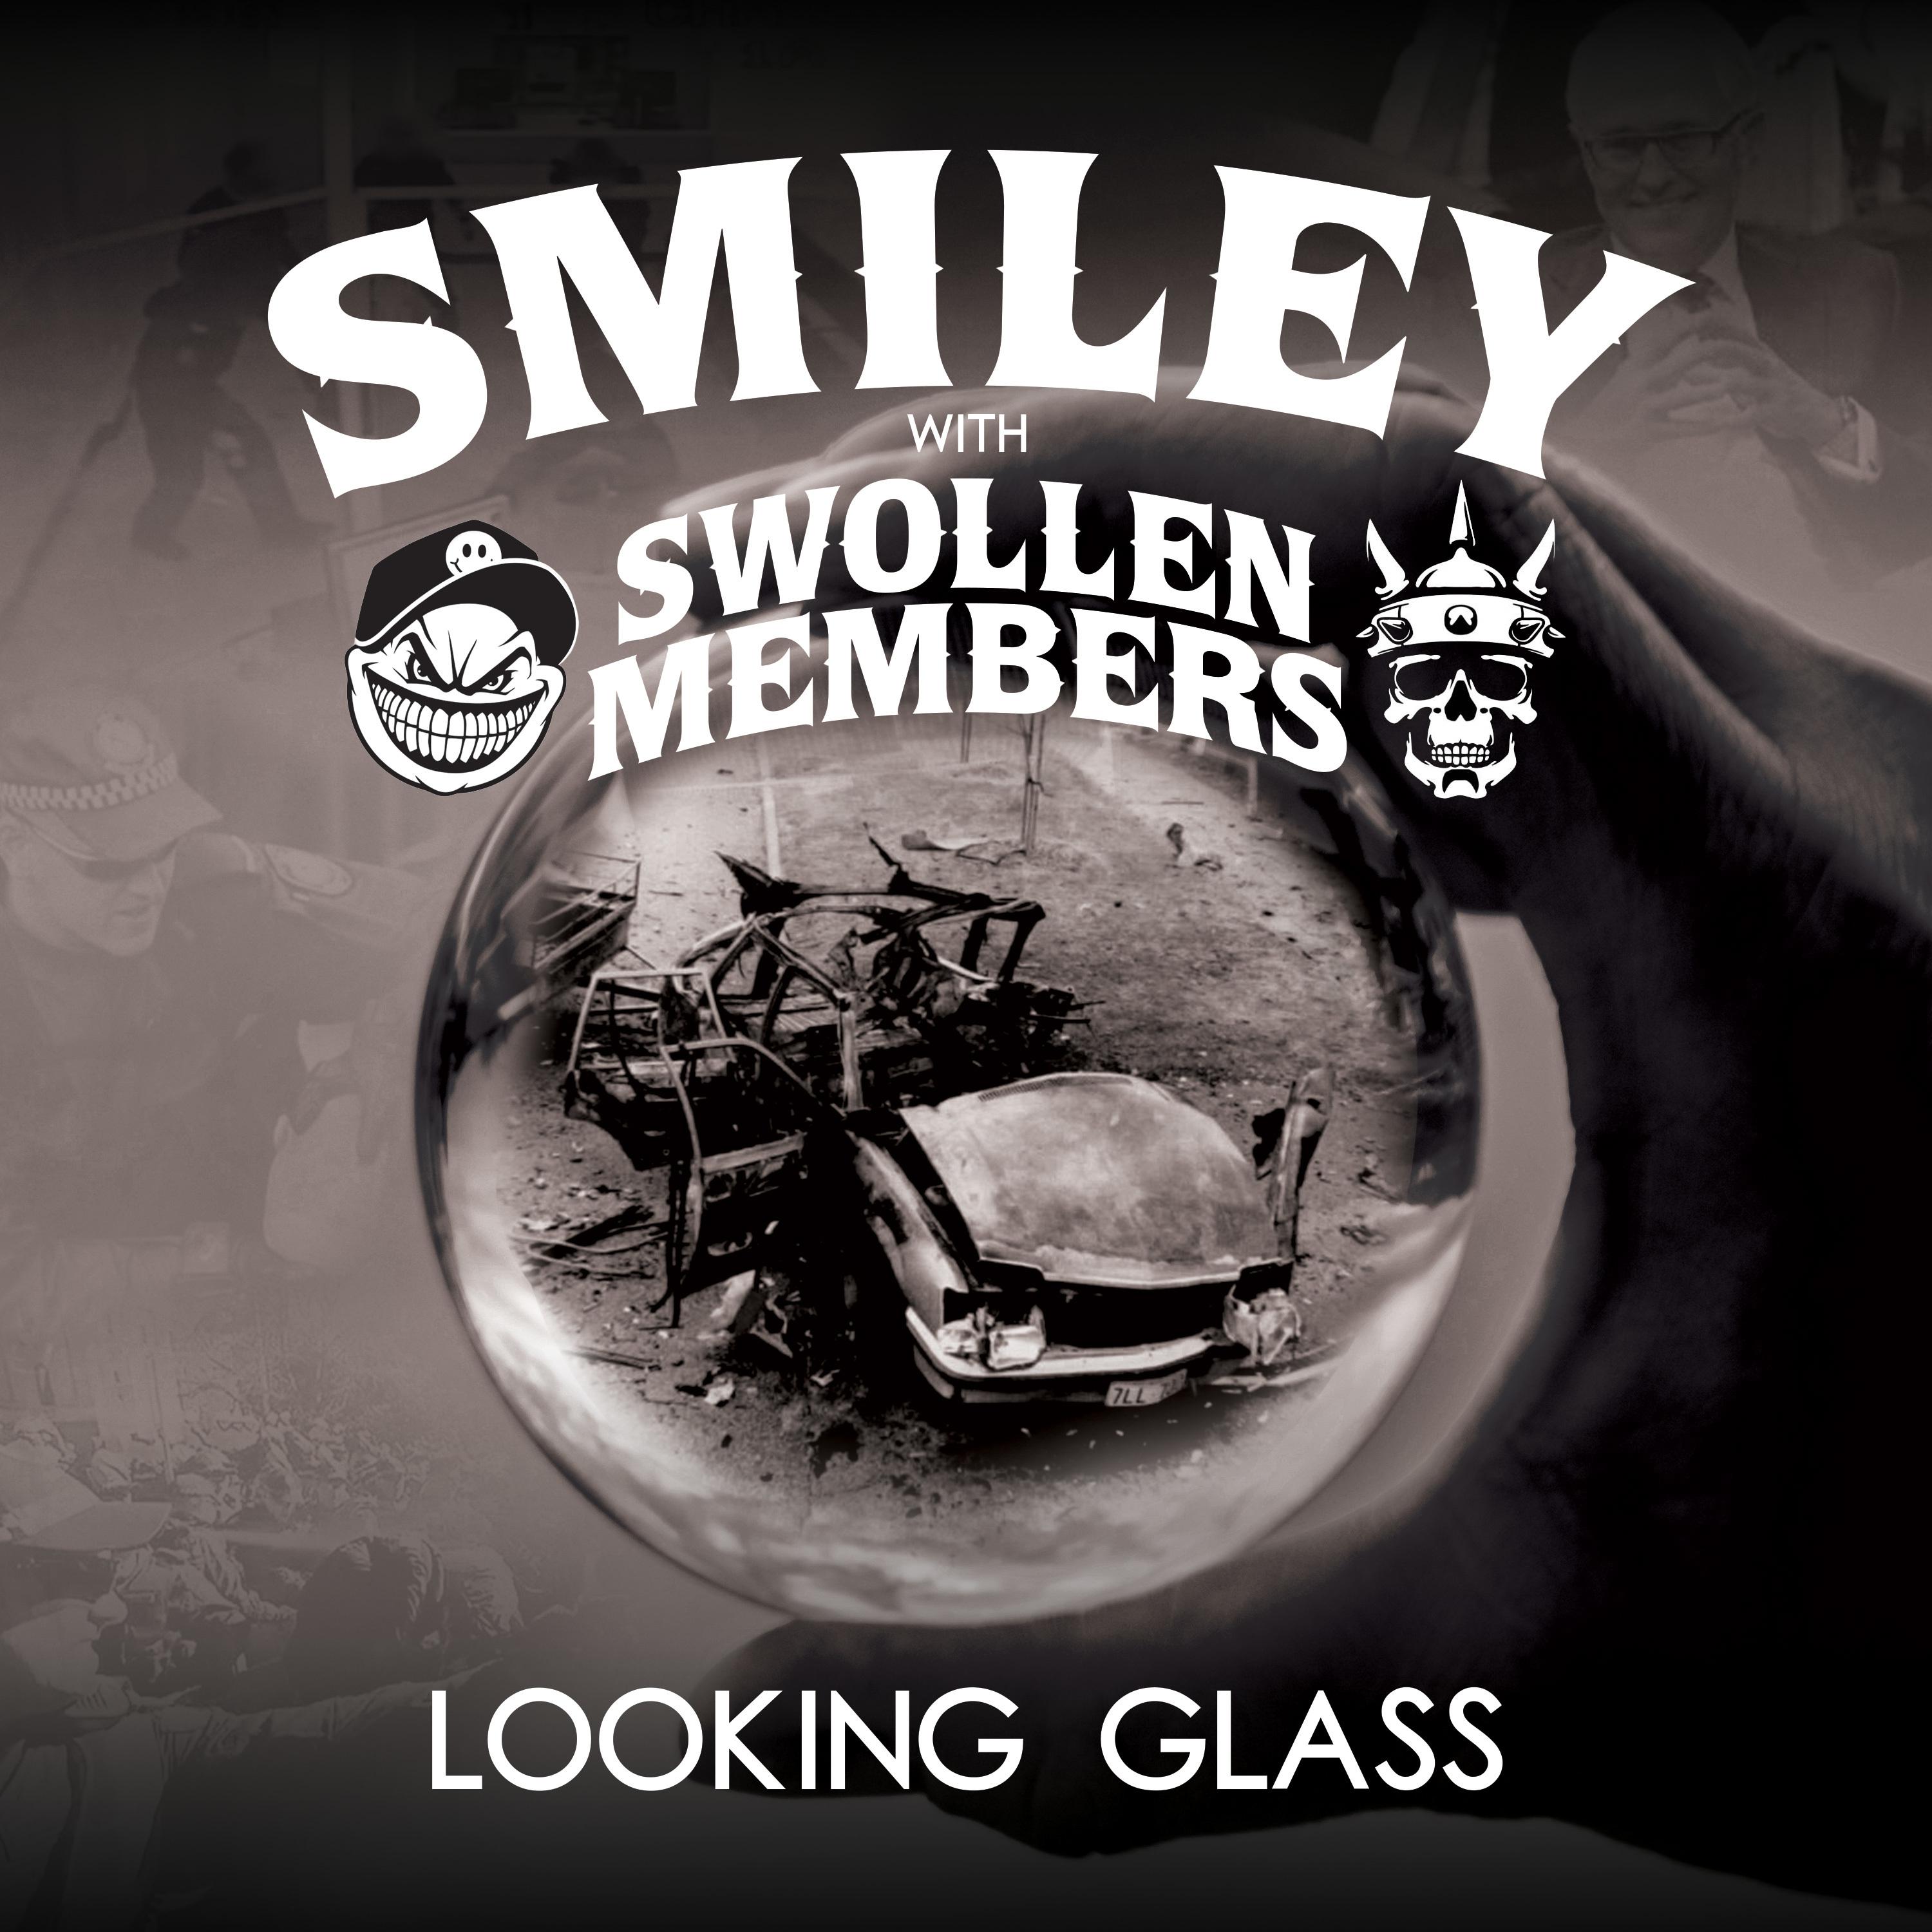 Looking Glass (featuring Swollen Members)